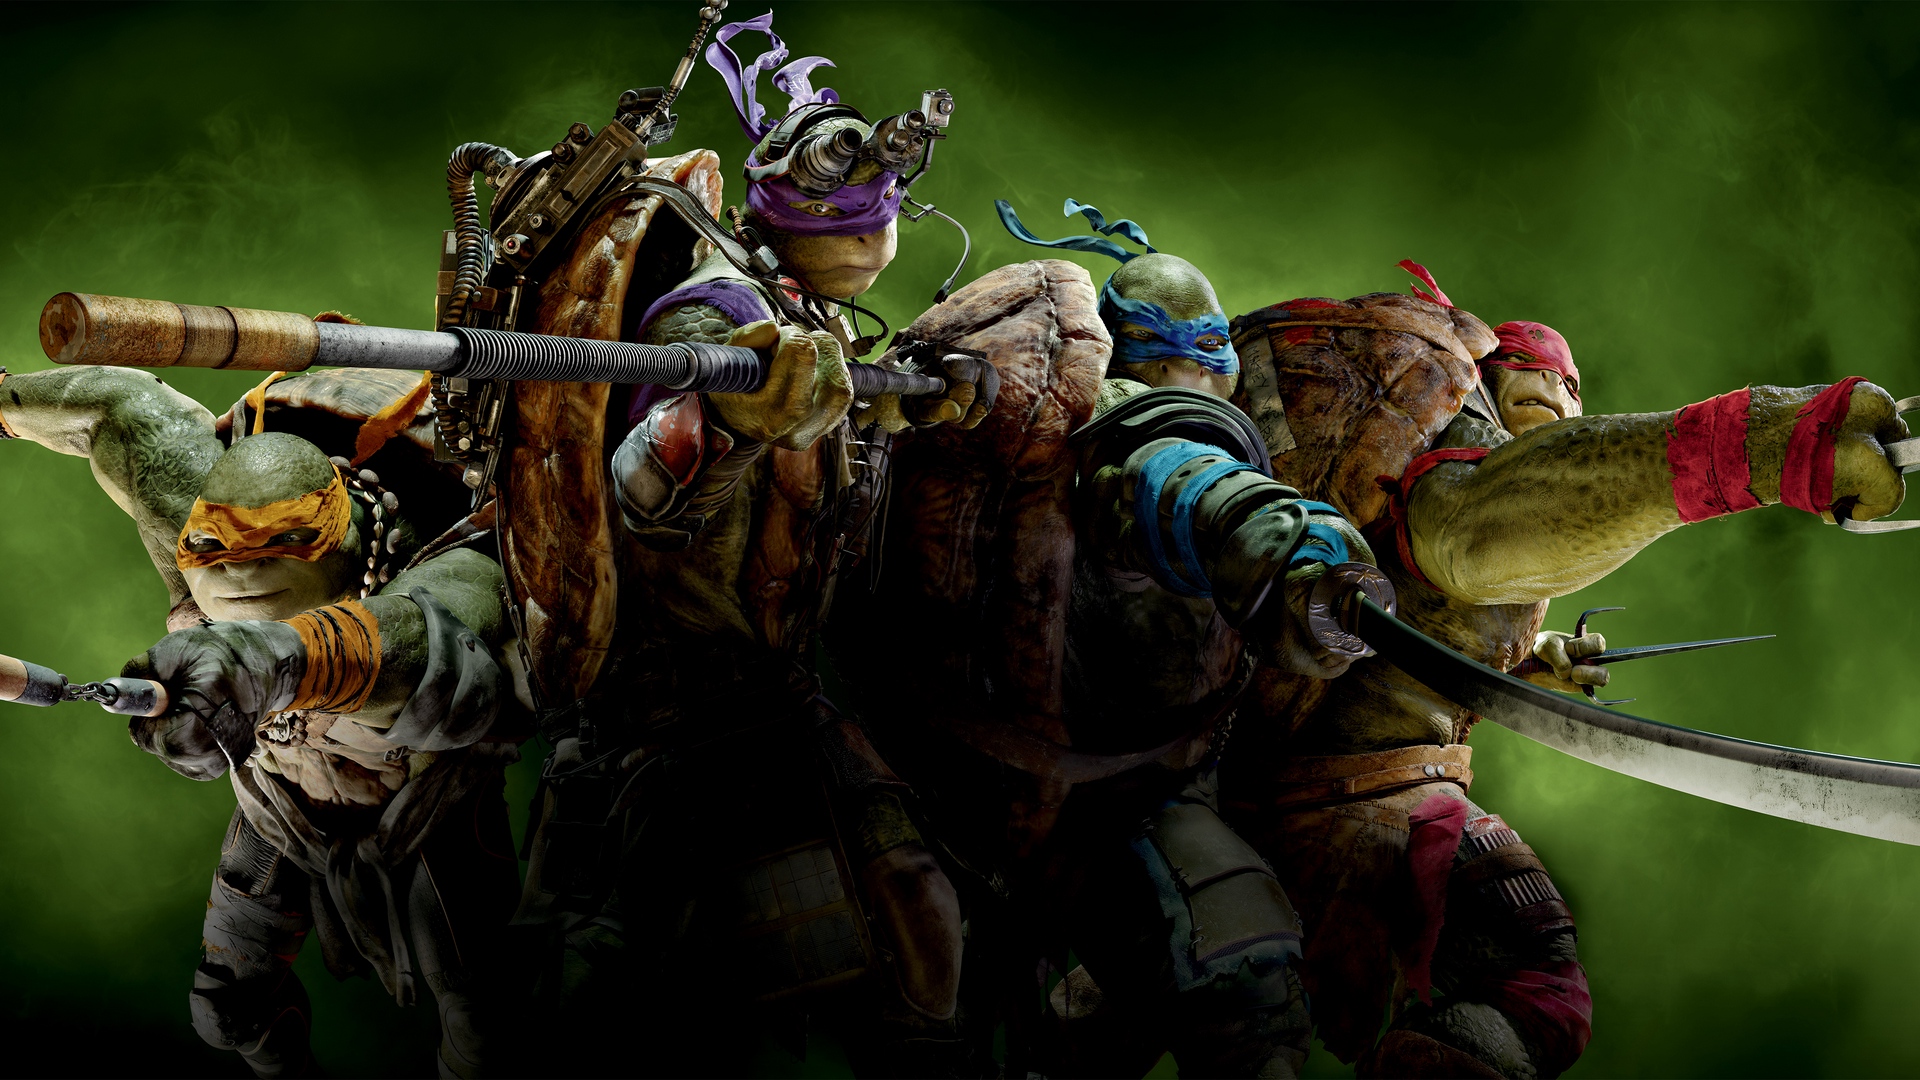 download wallpaper: Teenage Mutant Ninja Hero Turles wallpaper